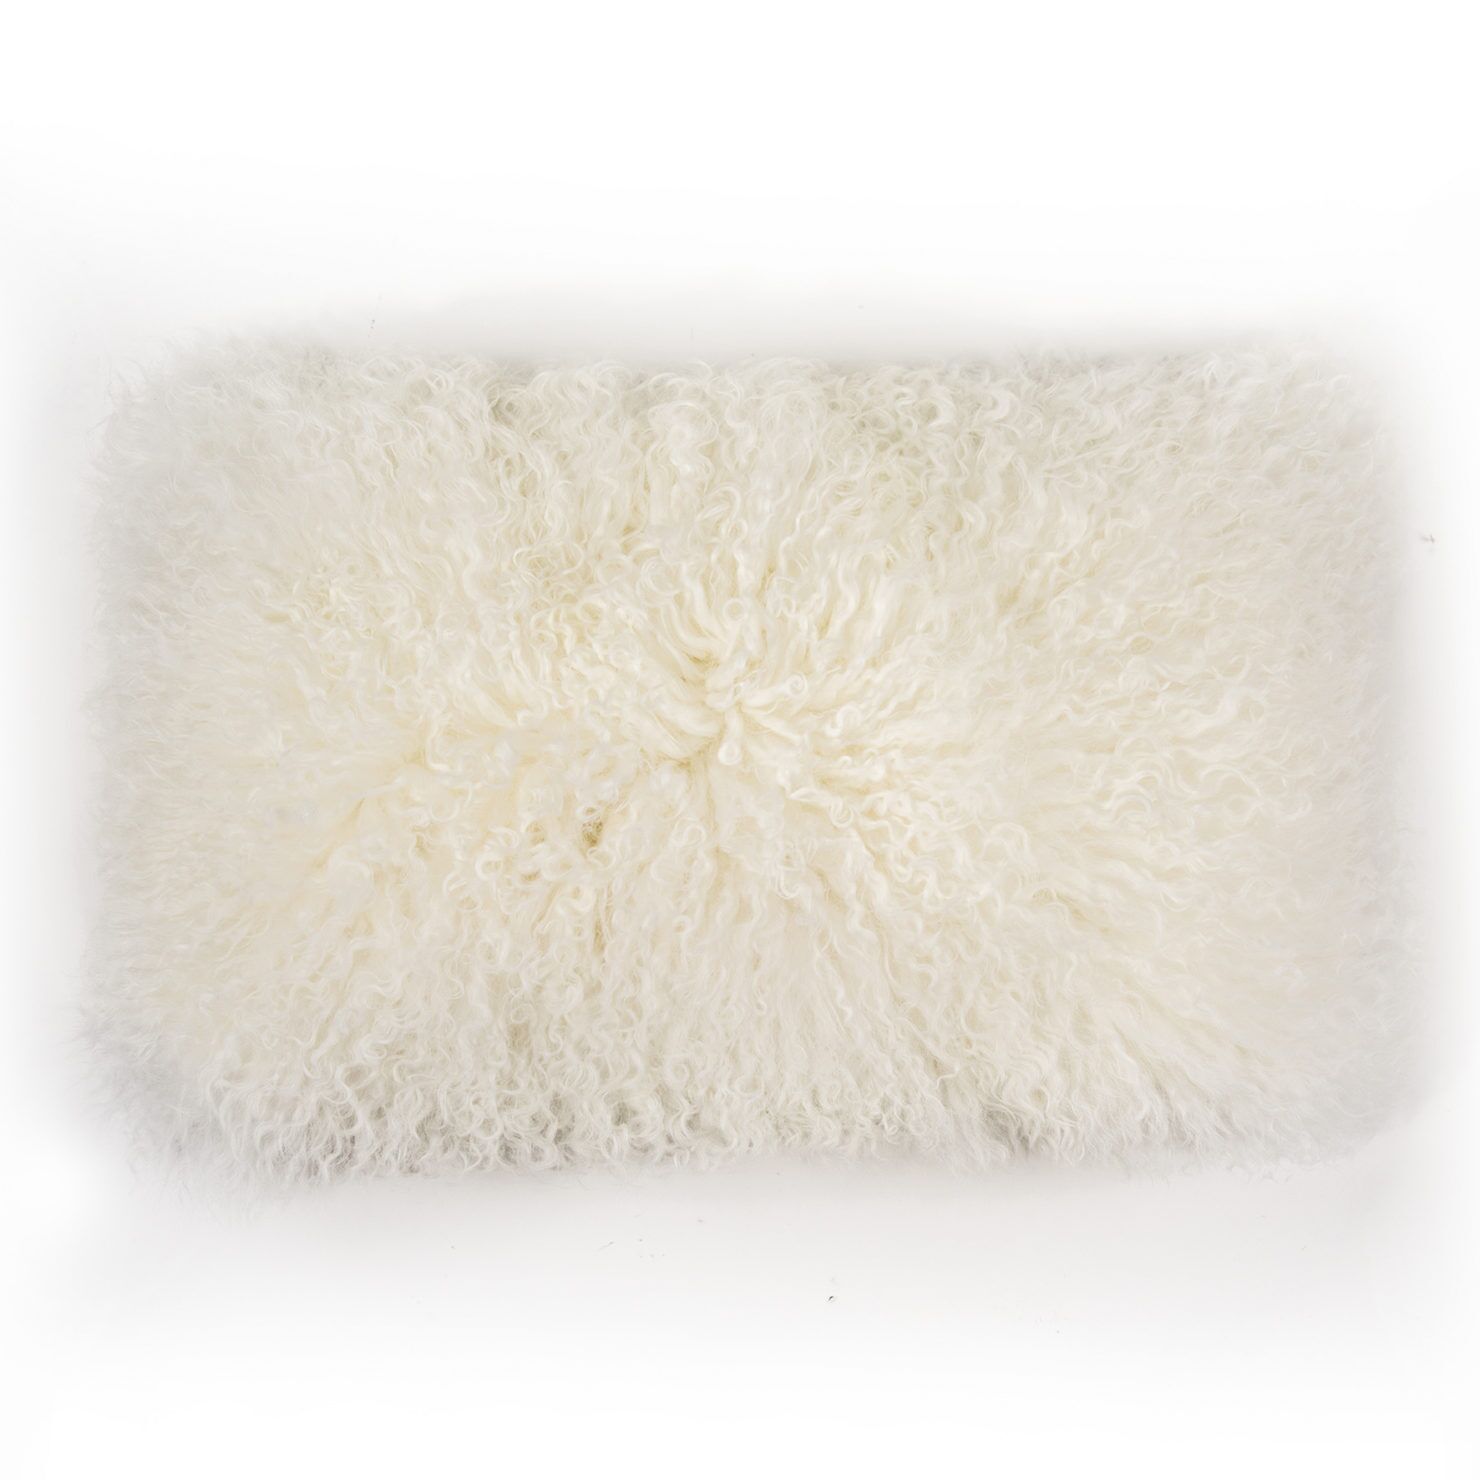 Pad Concept Fell Fur Schaf Sheep Glory Light Grey White 30 50 (2)